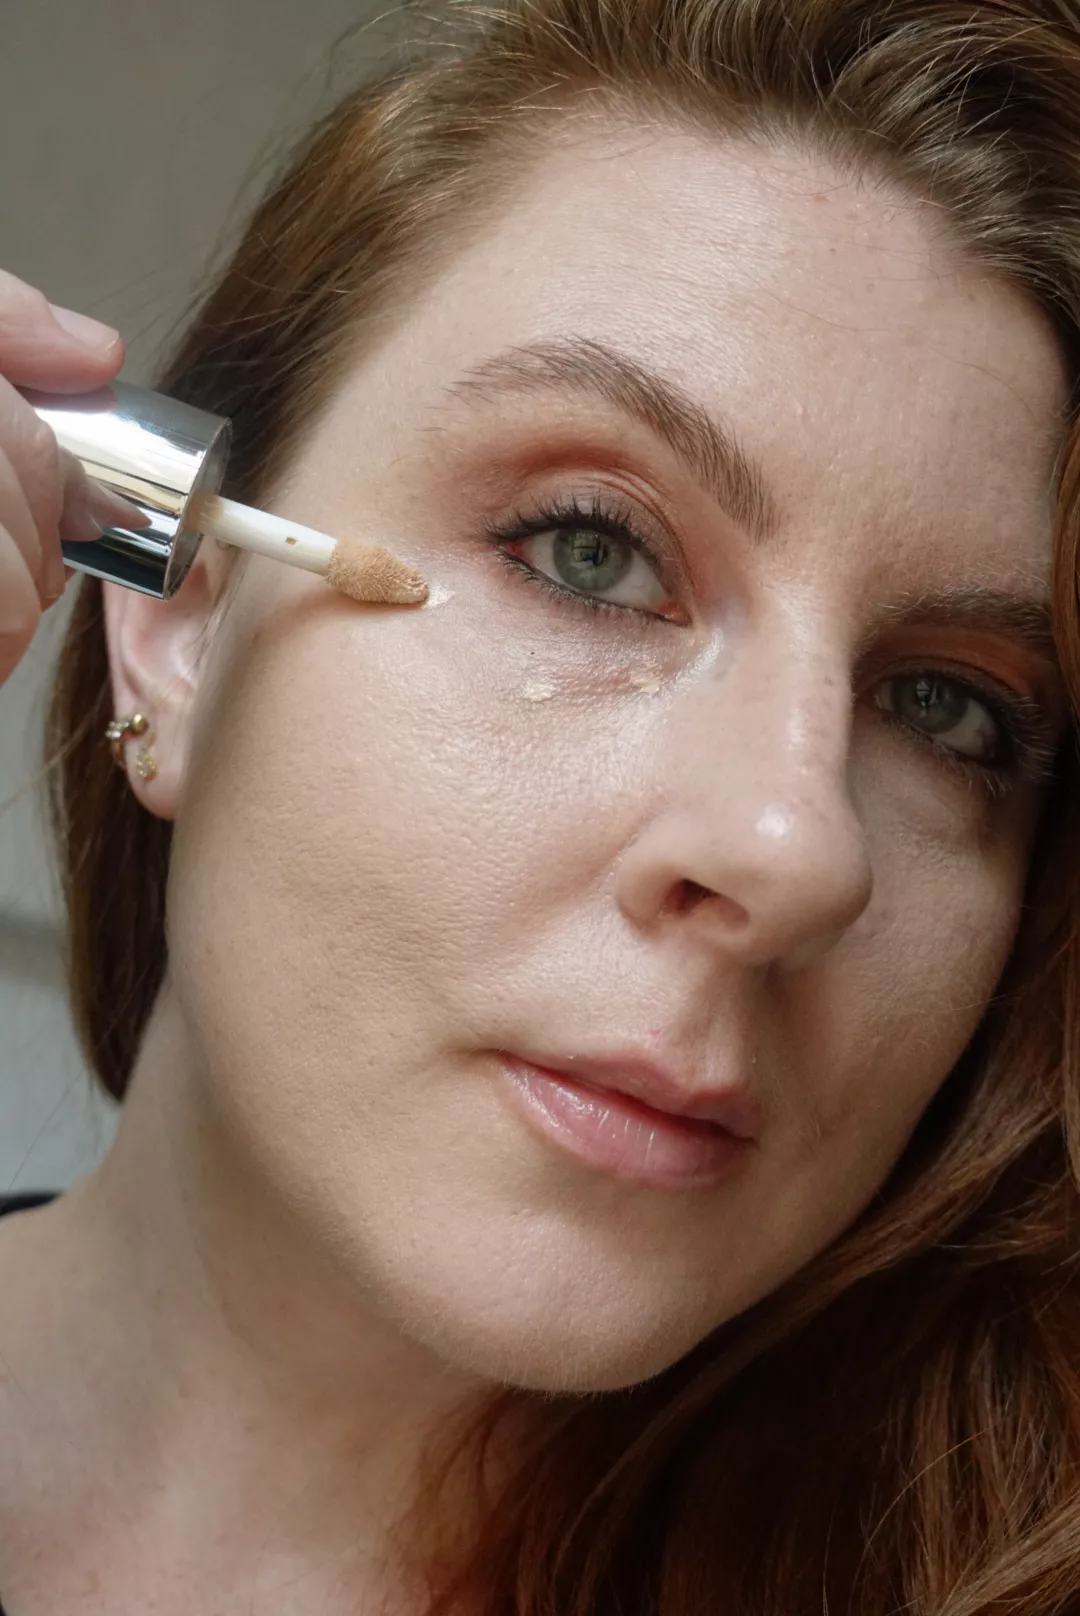 Makeup artist and Byrdie writer Ashley Rebecca applies concealer to her under-eyes